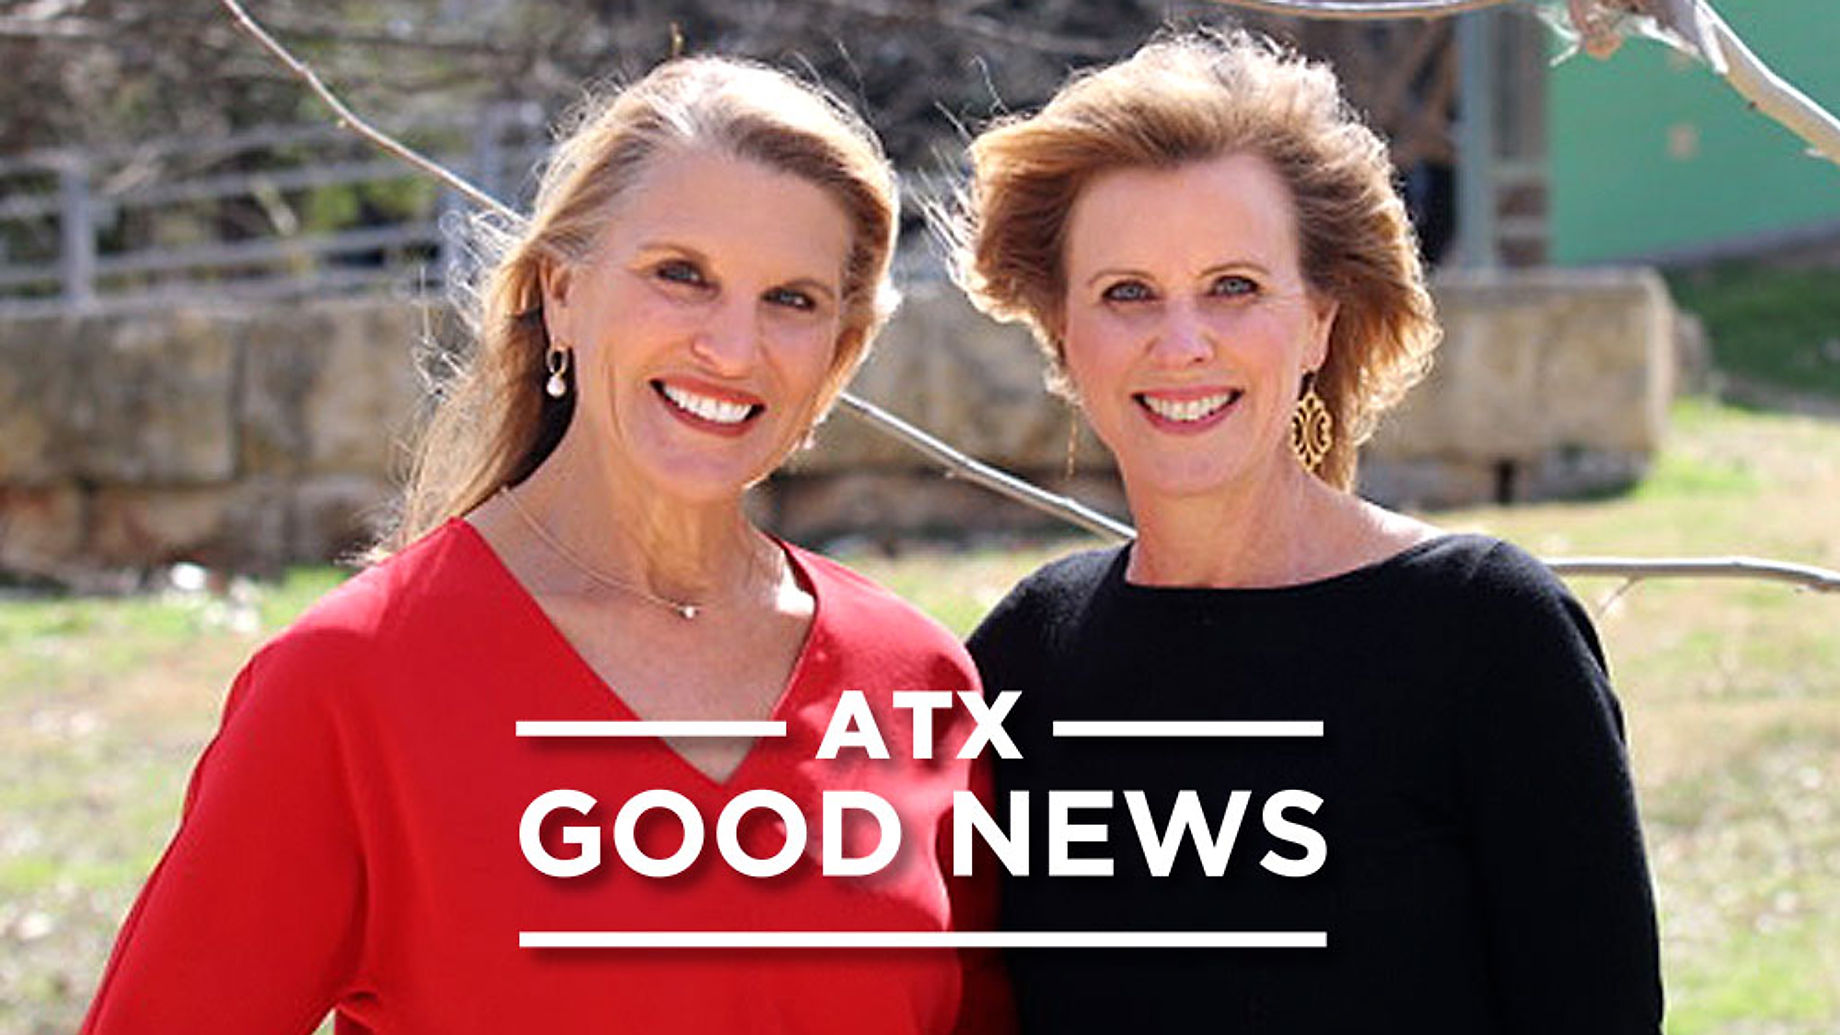 ATX Good News